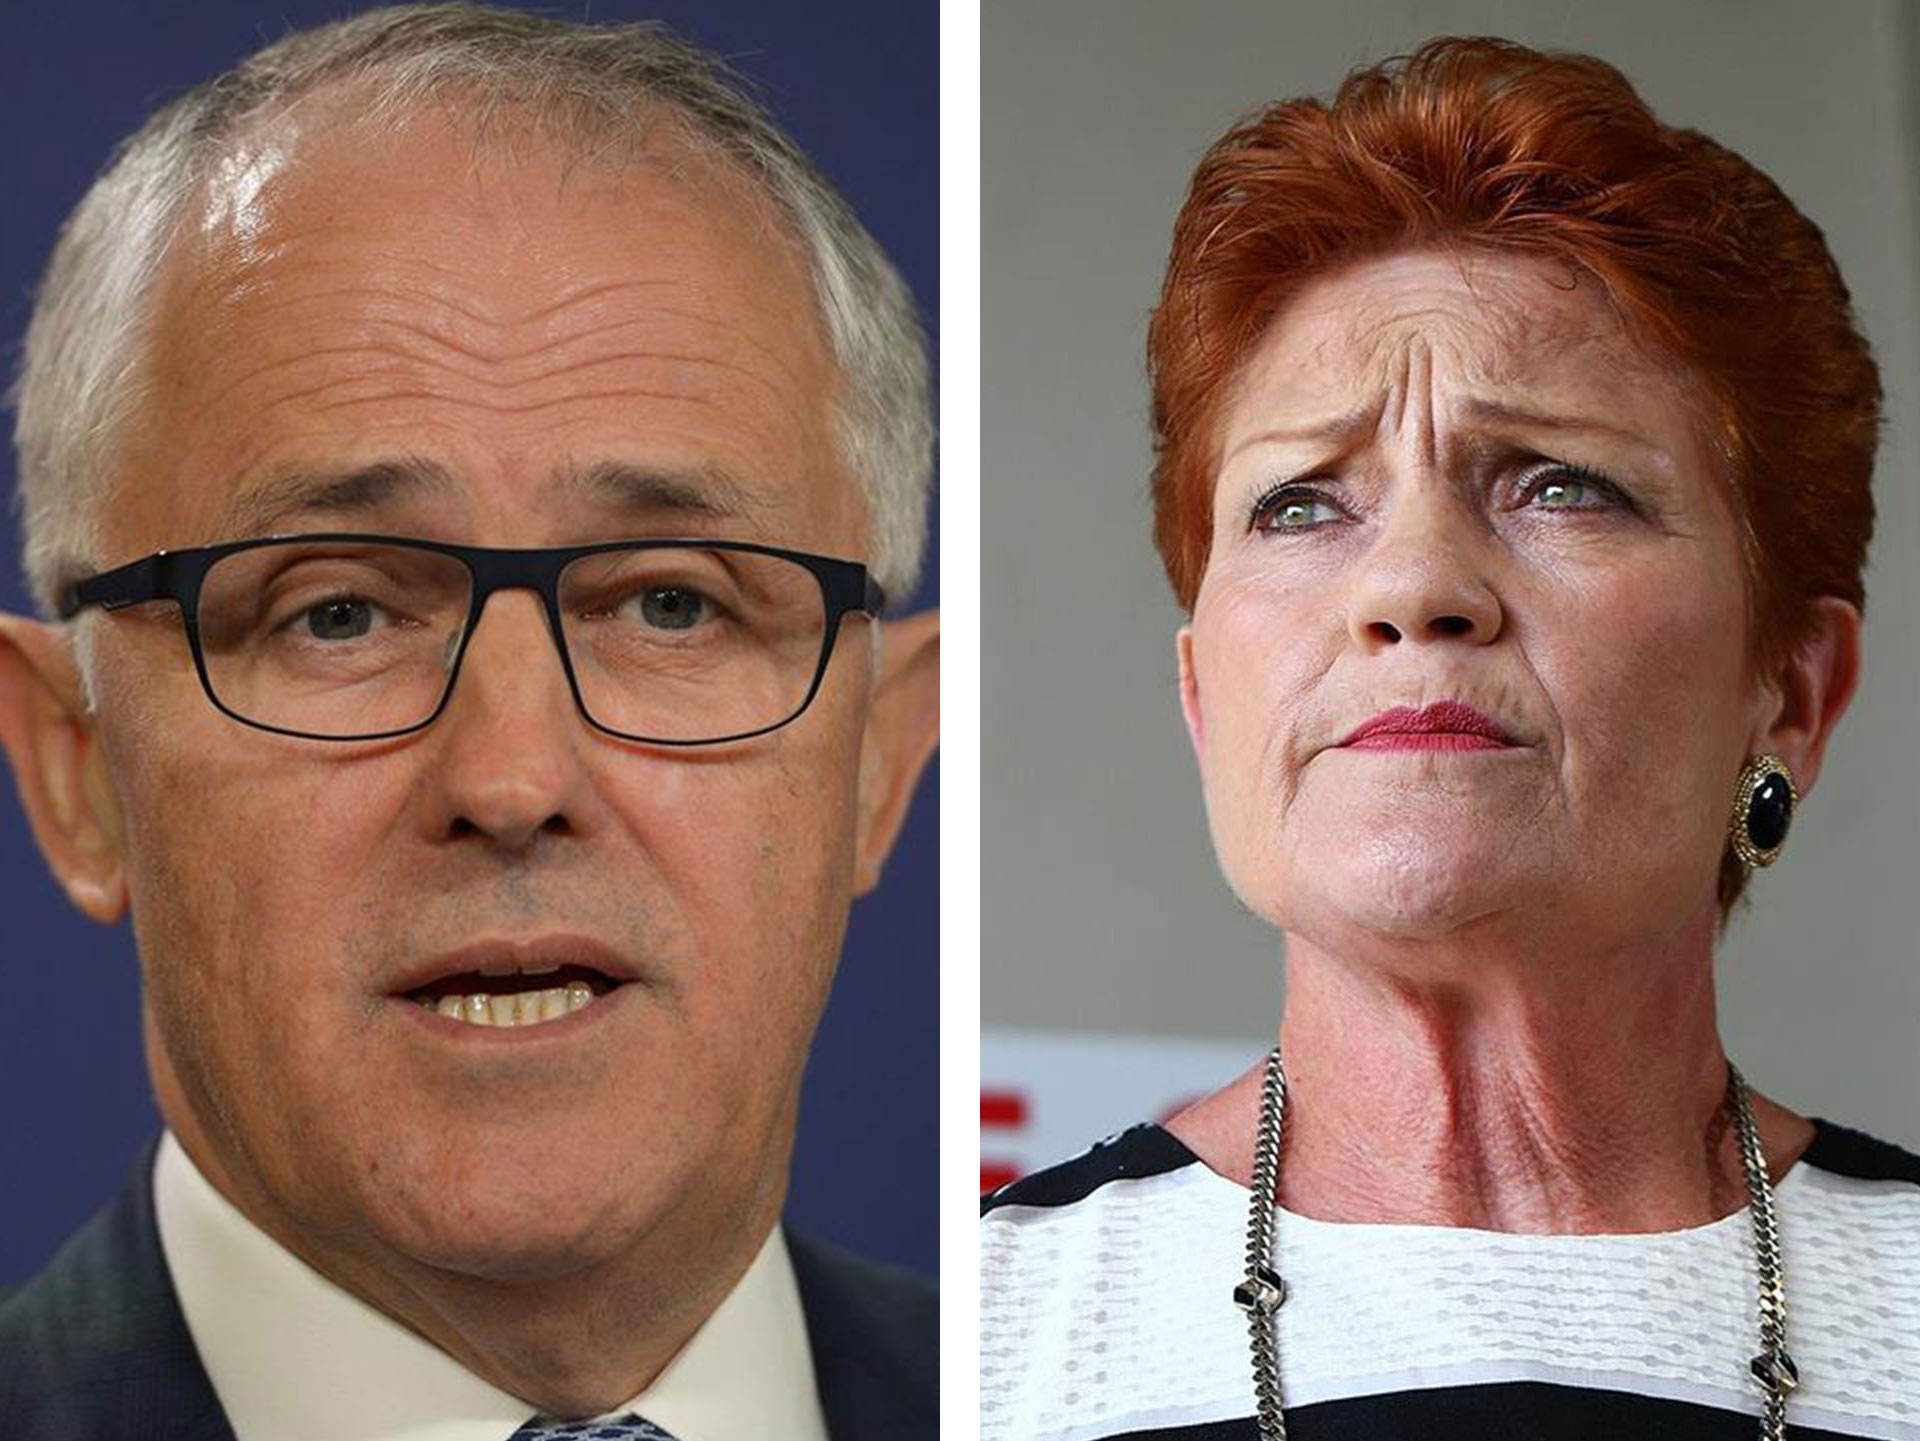 Prime Minister slams Pauline Hanson’s anti-Islam video